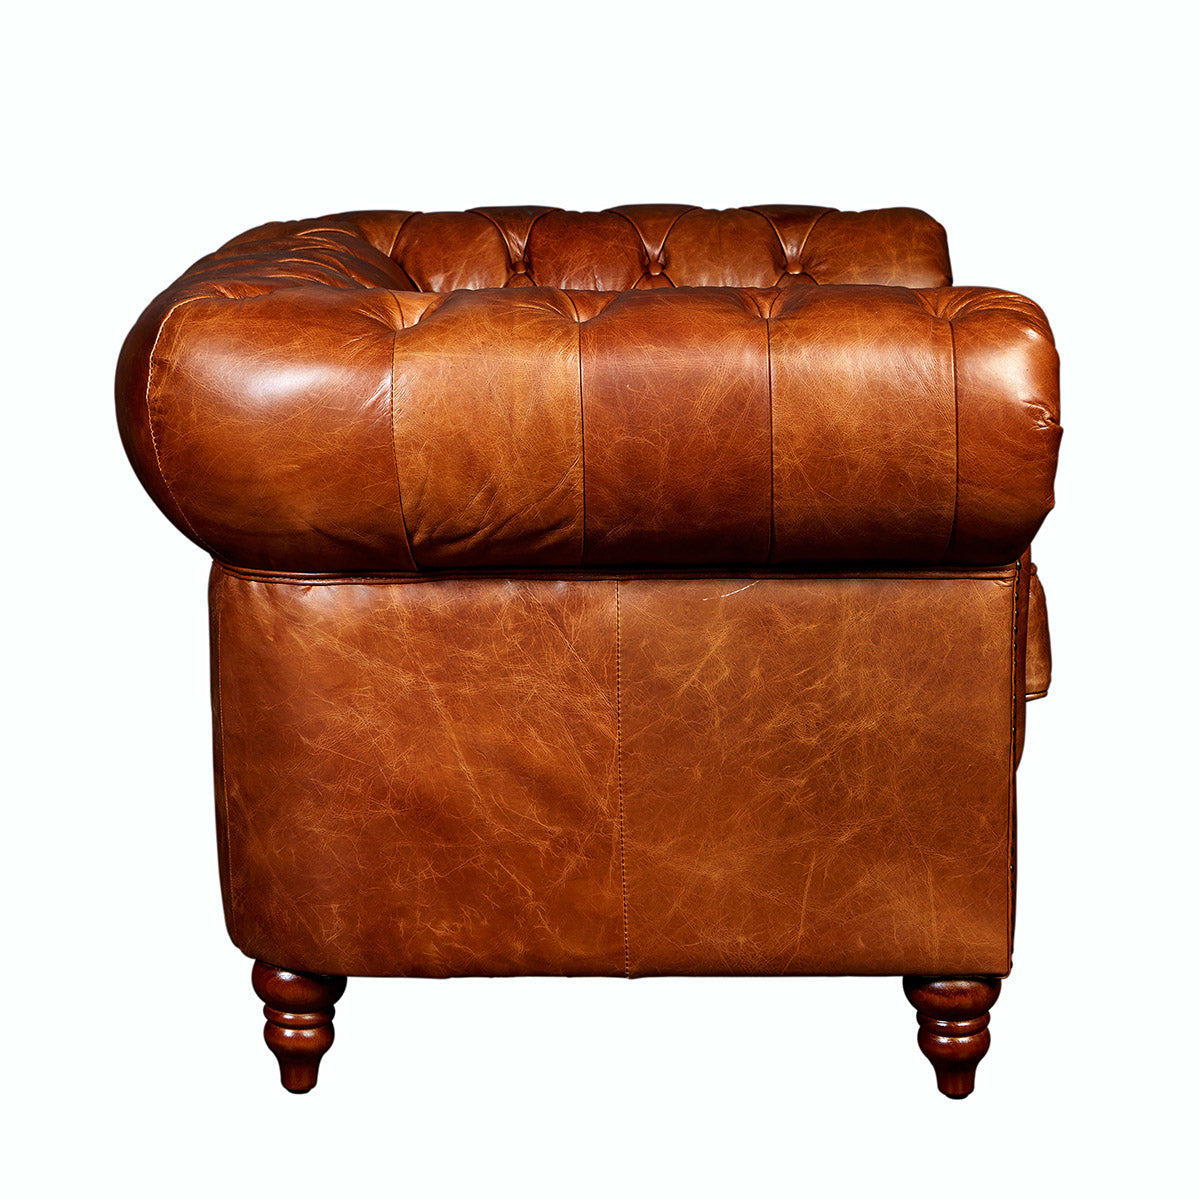 Chesterfield Arm Chair - Full grain leather